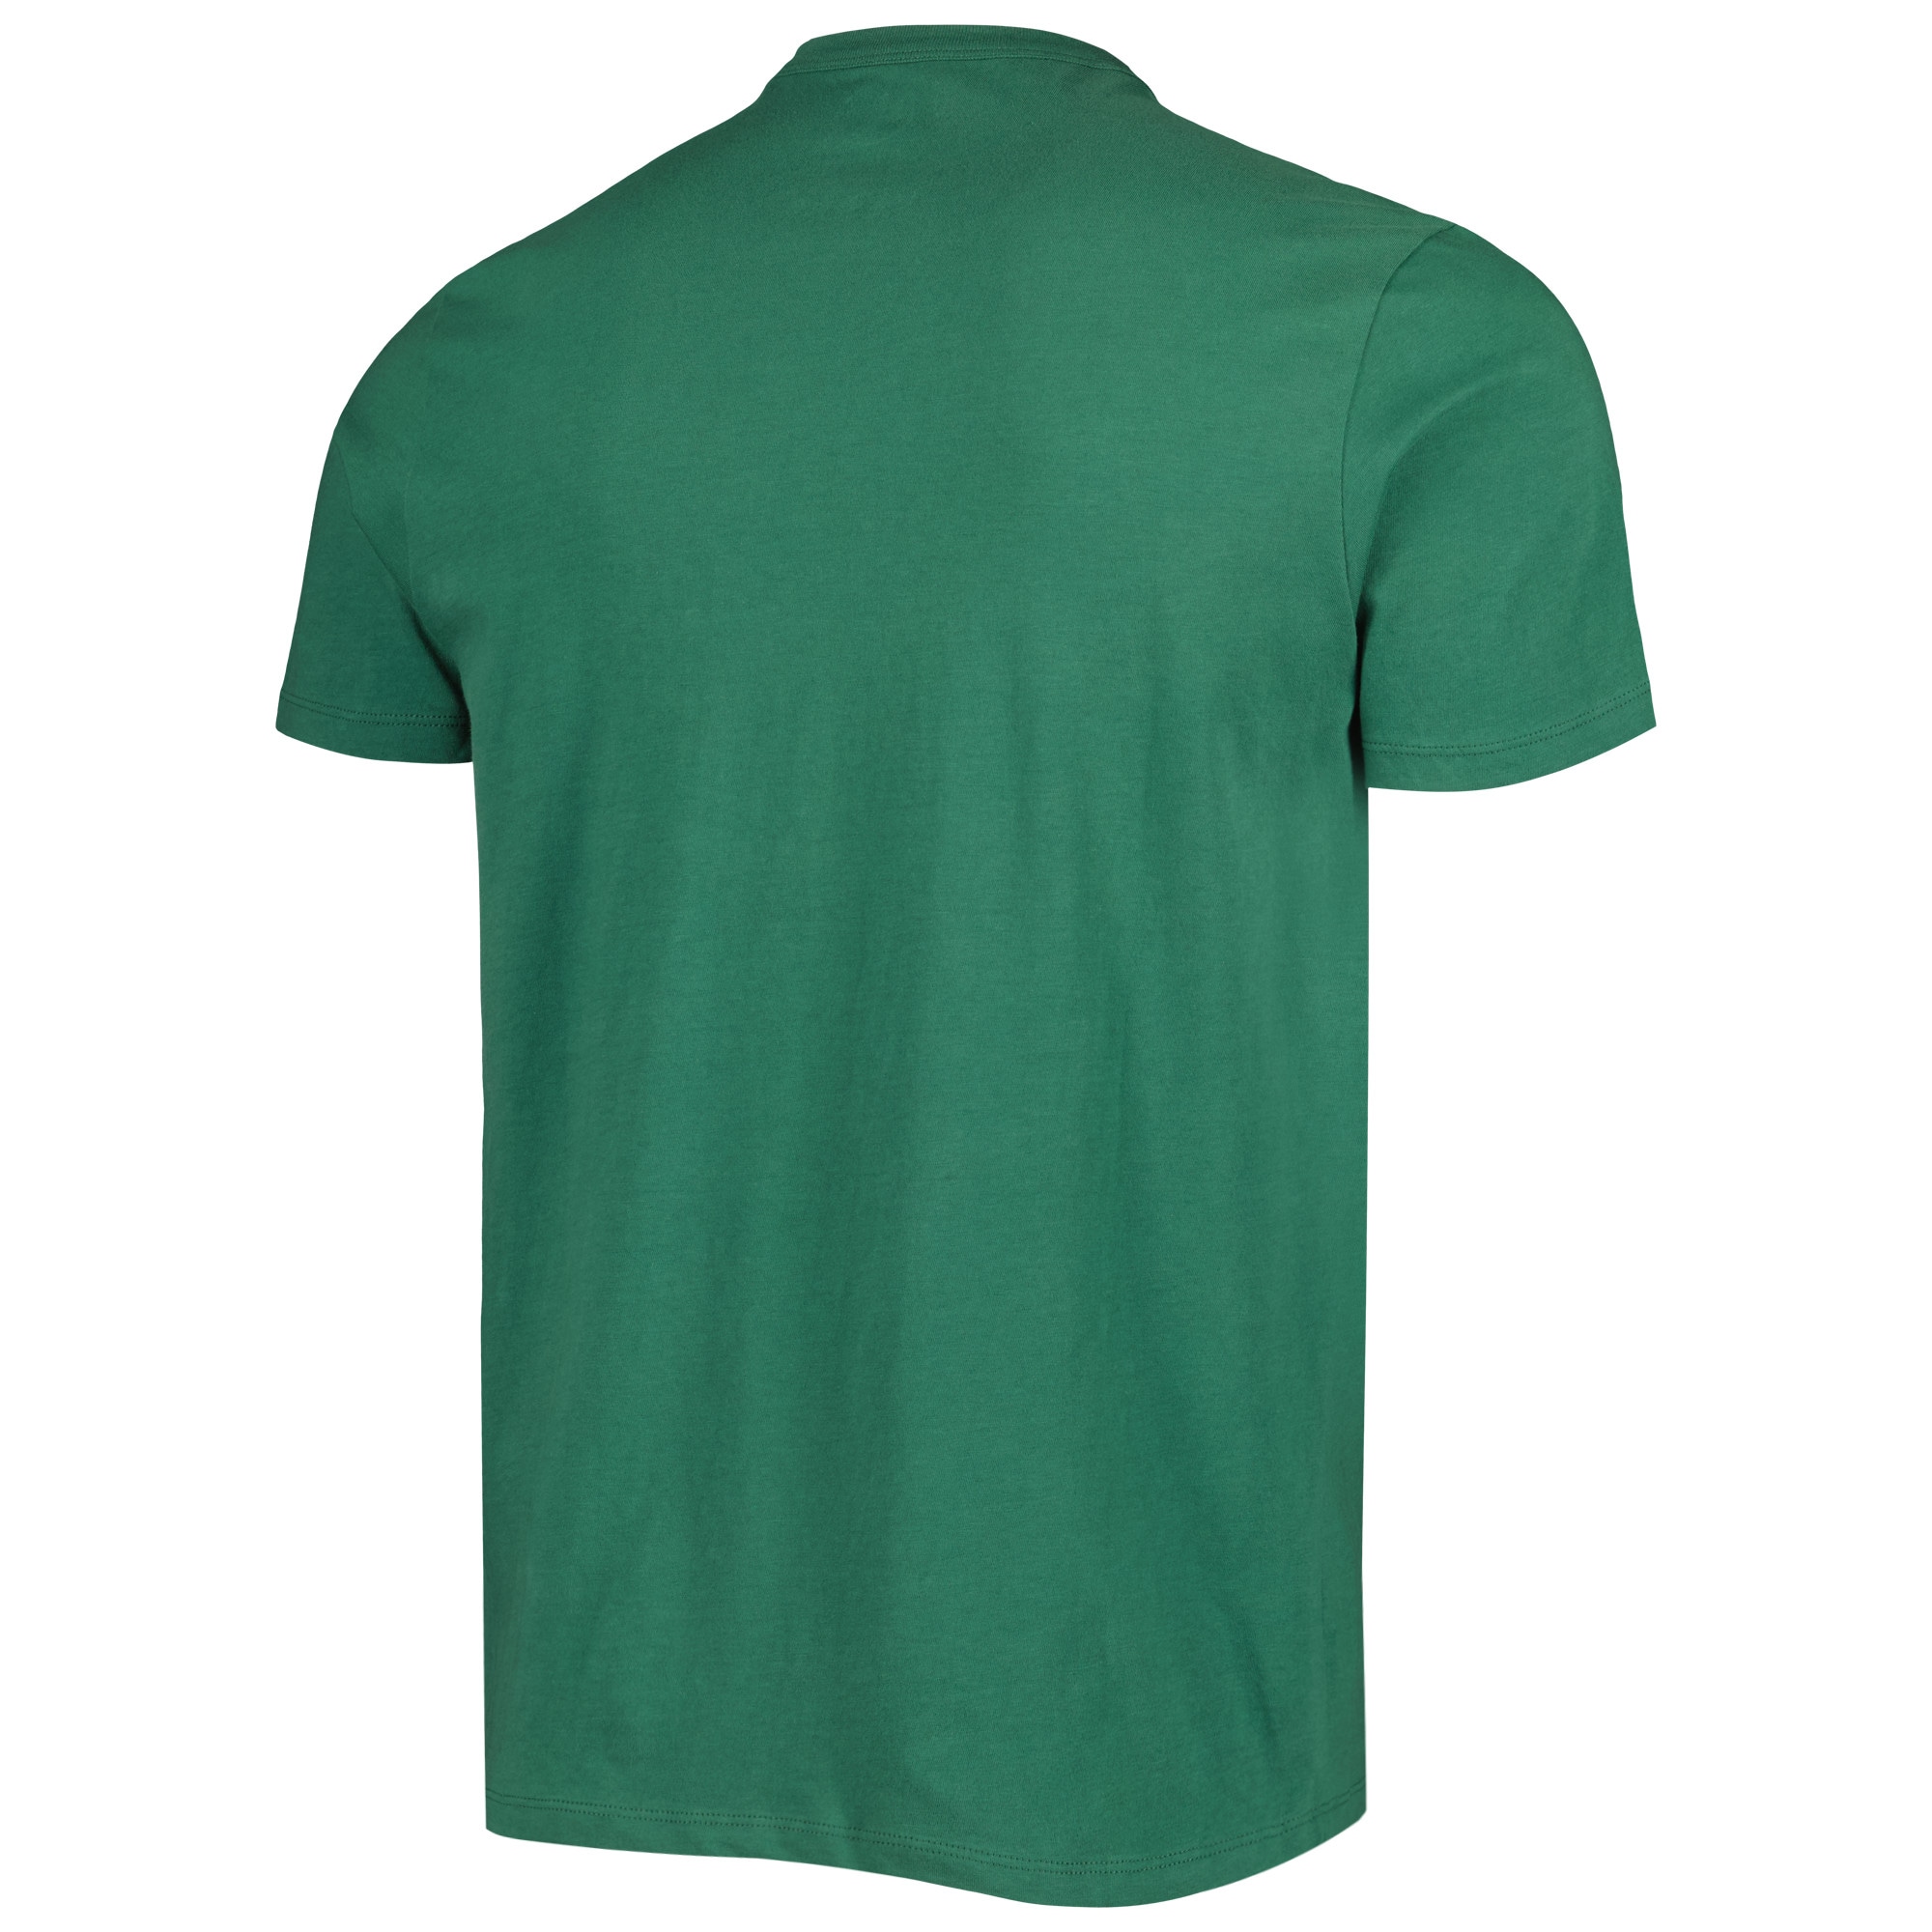 Men's '47 Green Green Bay Packers Wordmark Rider Franklin T-Shirt - image 3 of 3